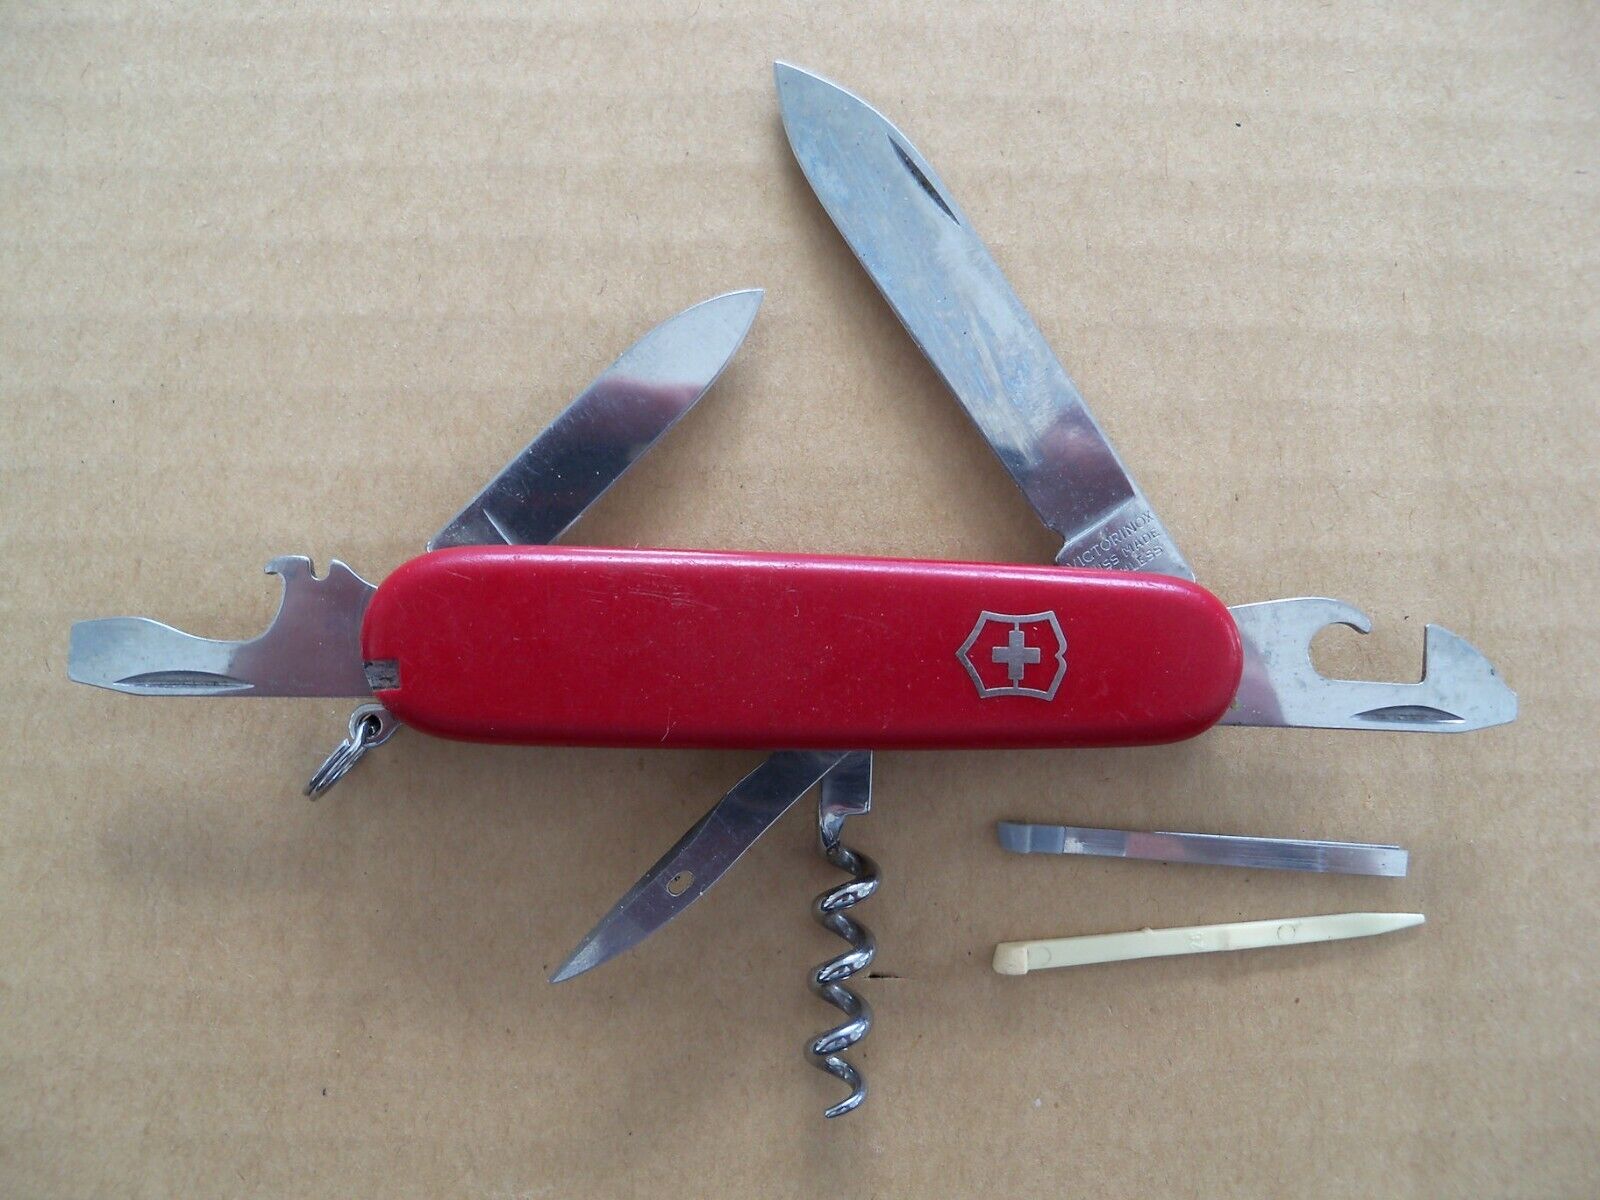 Victorinox Spartan Swiss Army Pocket Knife - Red - Corkscrew - Very Good